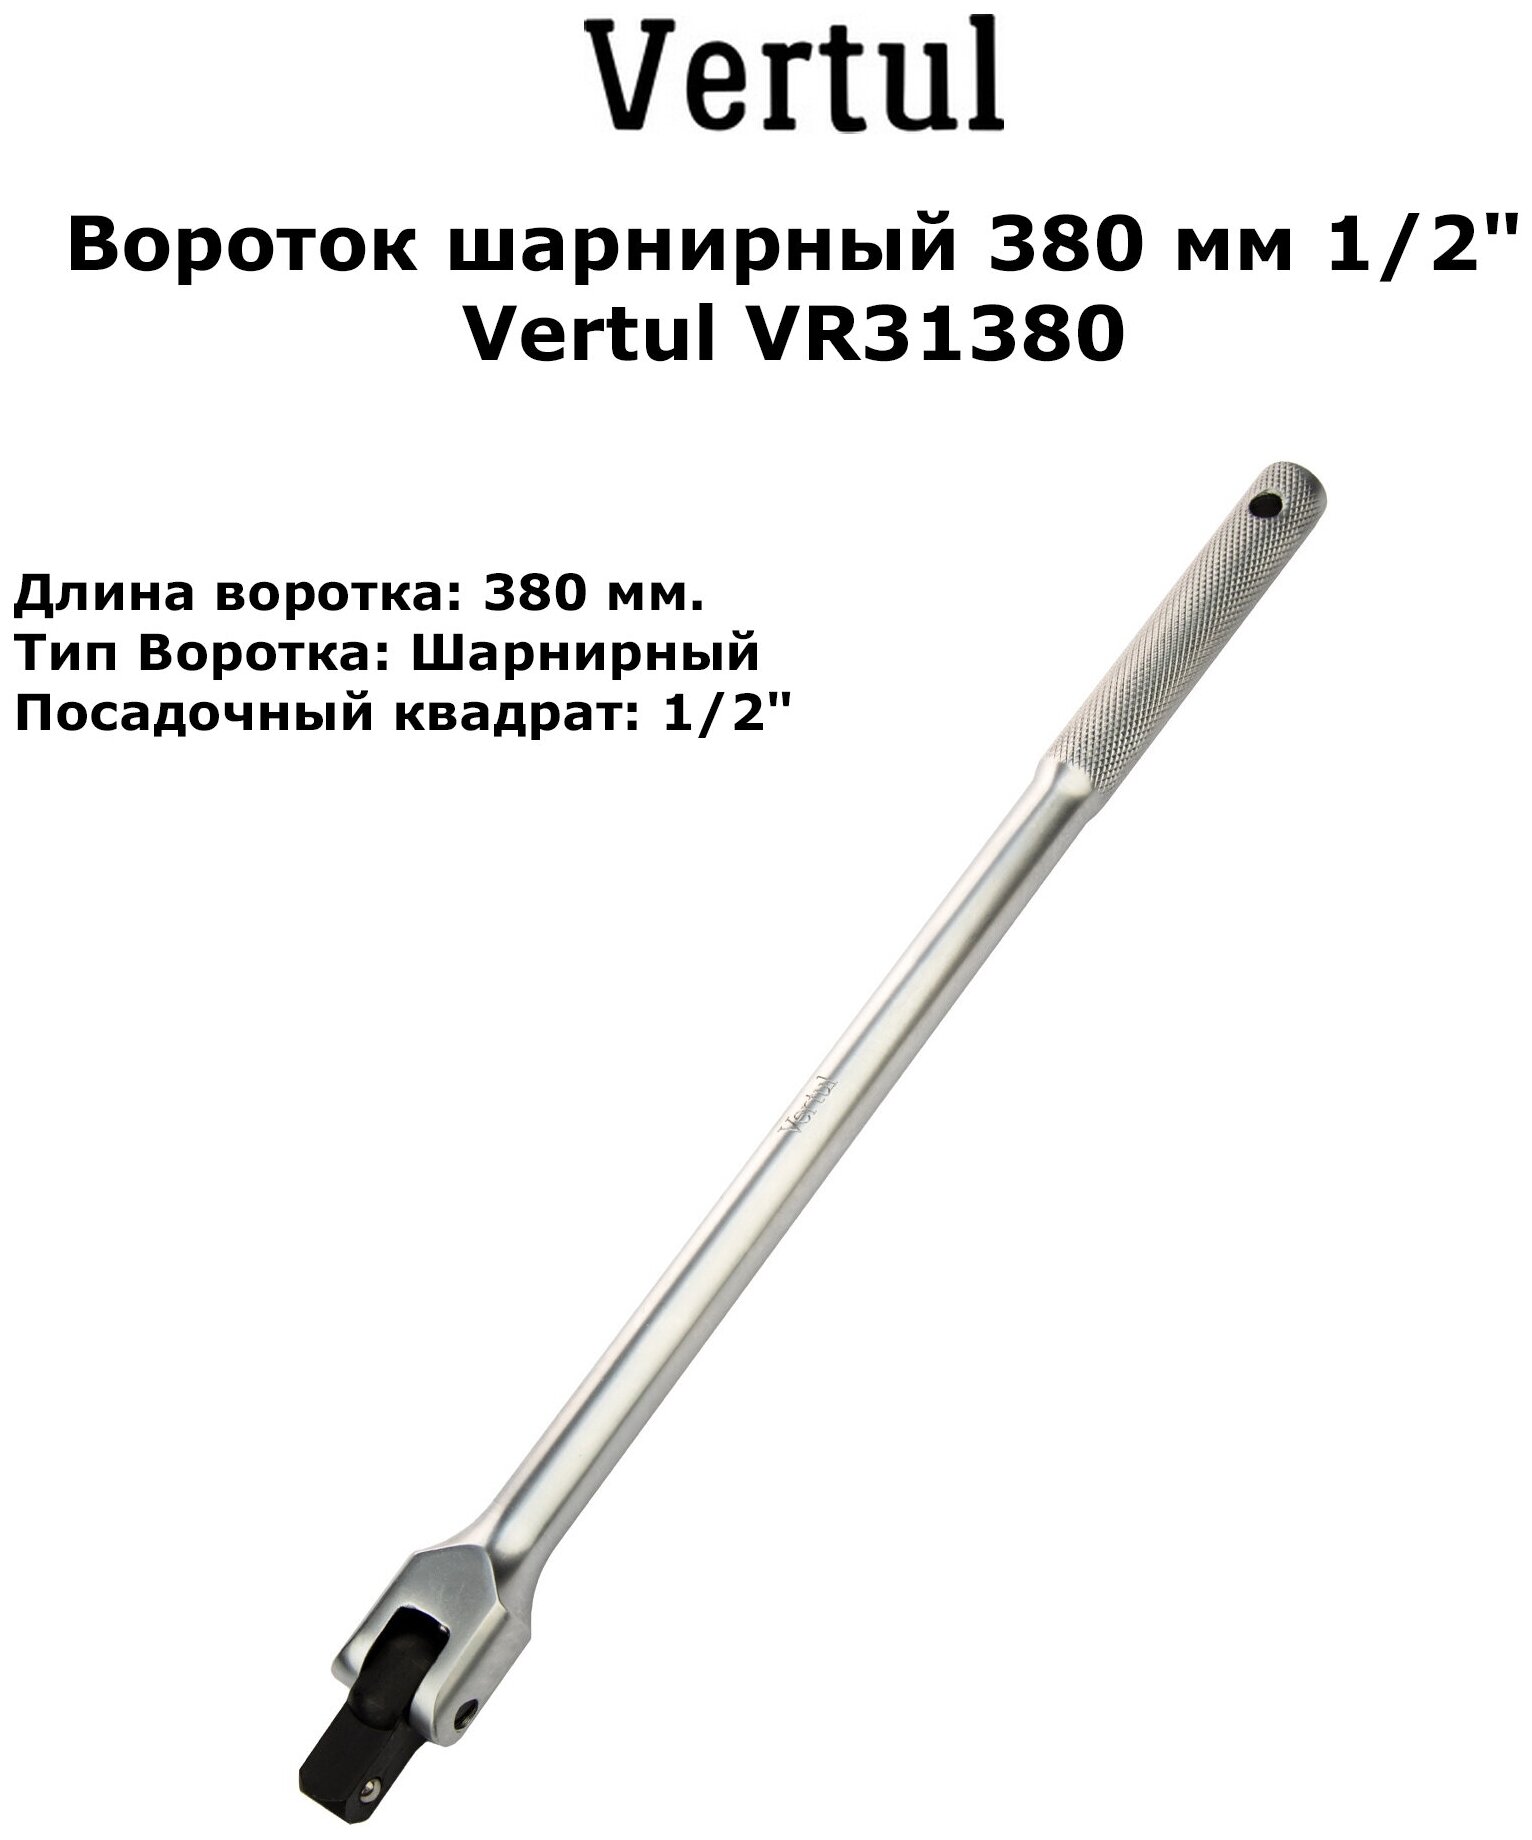 Вороток шарнирный 380 мм 1/2" Vertul VR31380